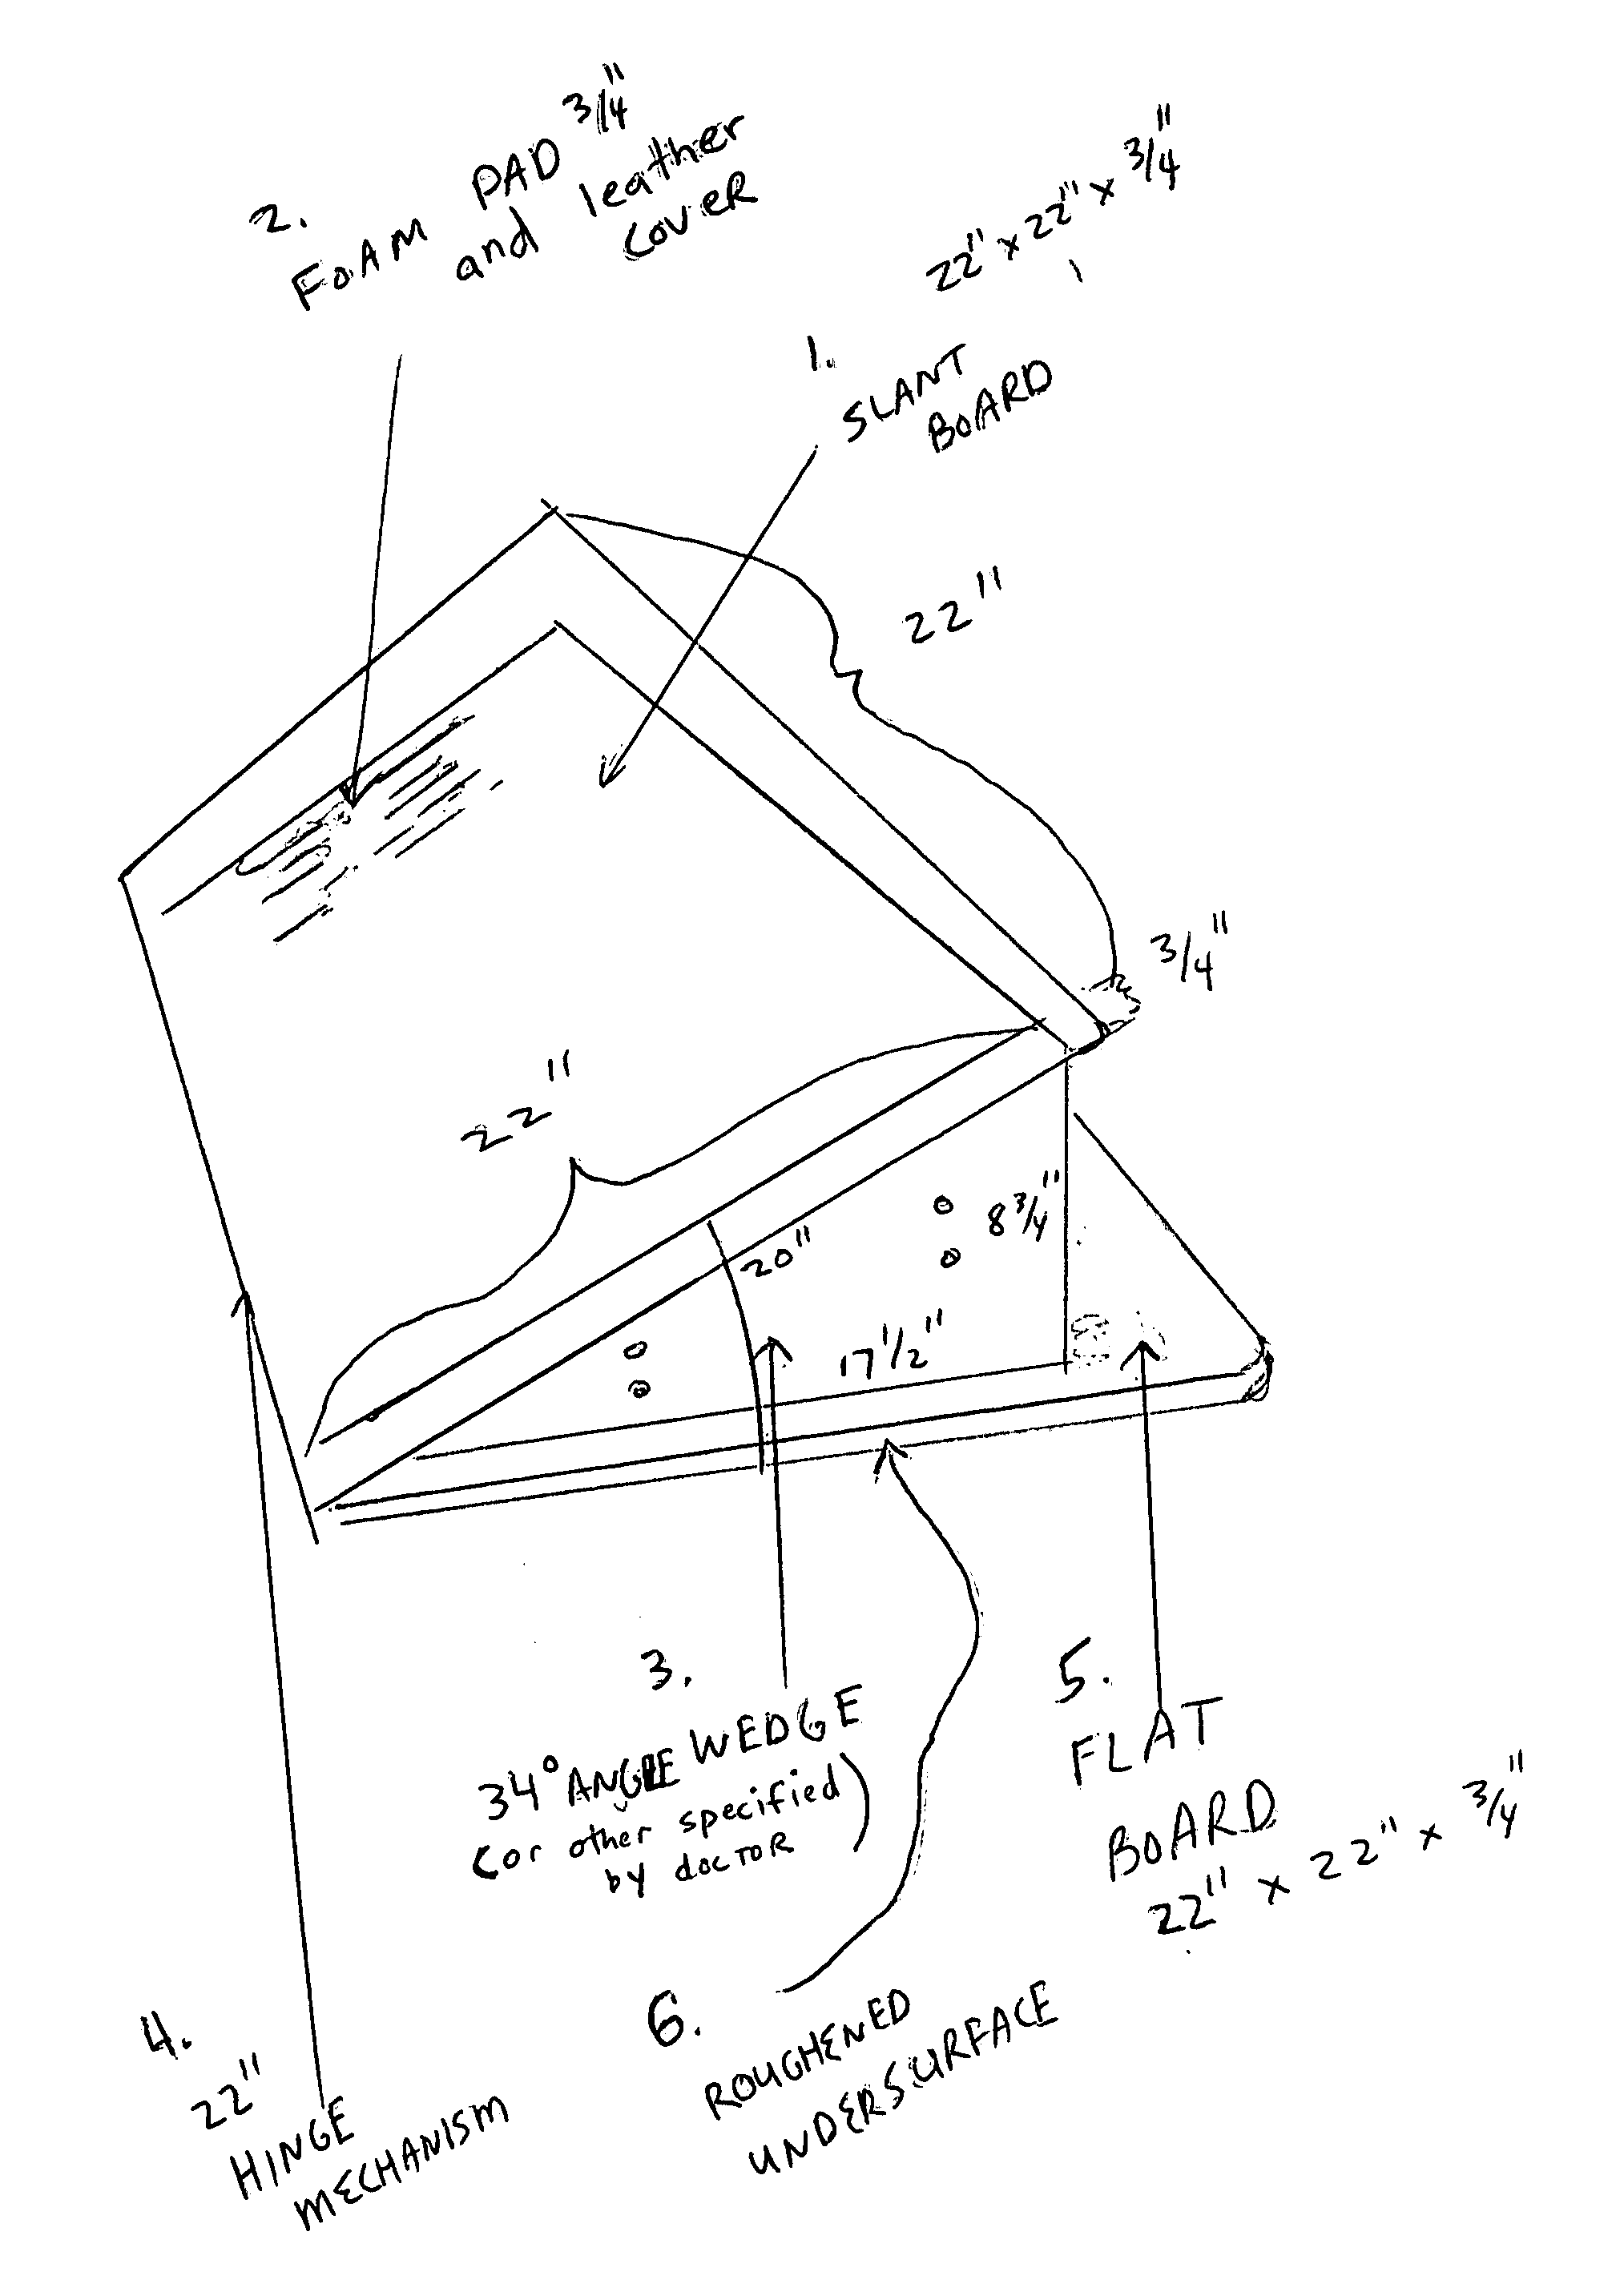 Portable slant board anterior adjusting table